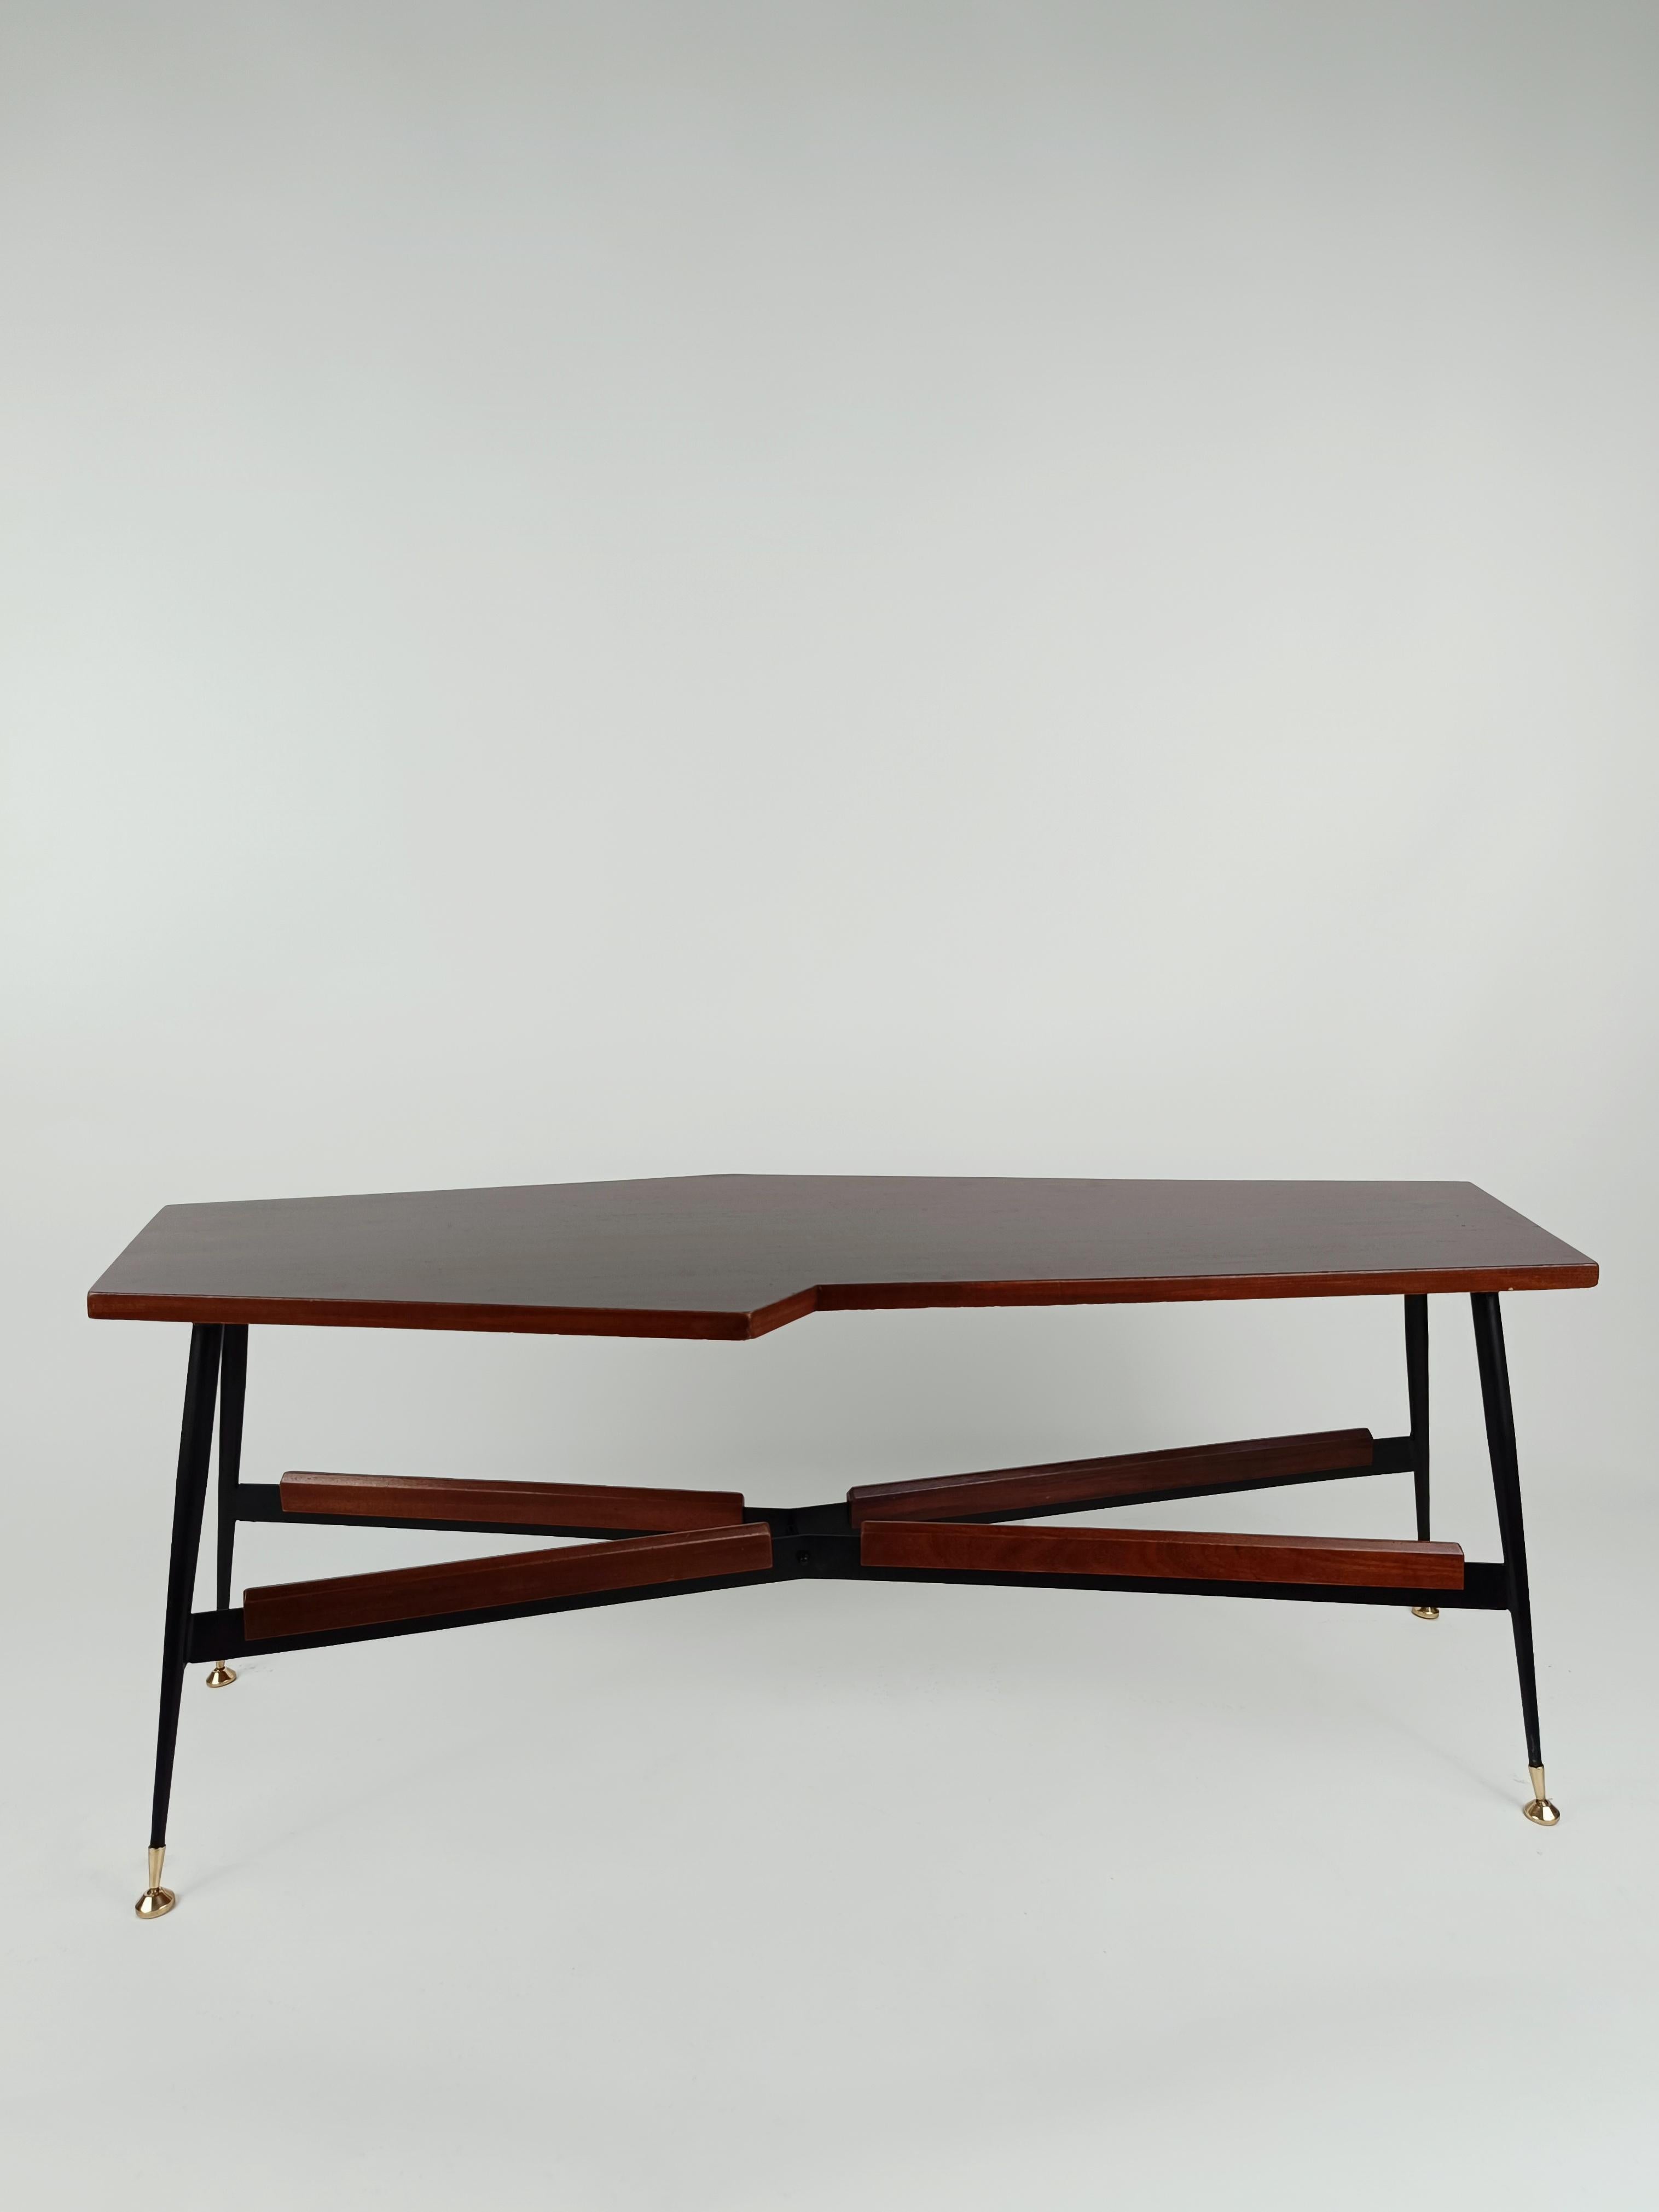 20th Century Italian Midcentury Coffe Table, Asymmetrical Top Veneered in Teak and Iron Legs For Sale